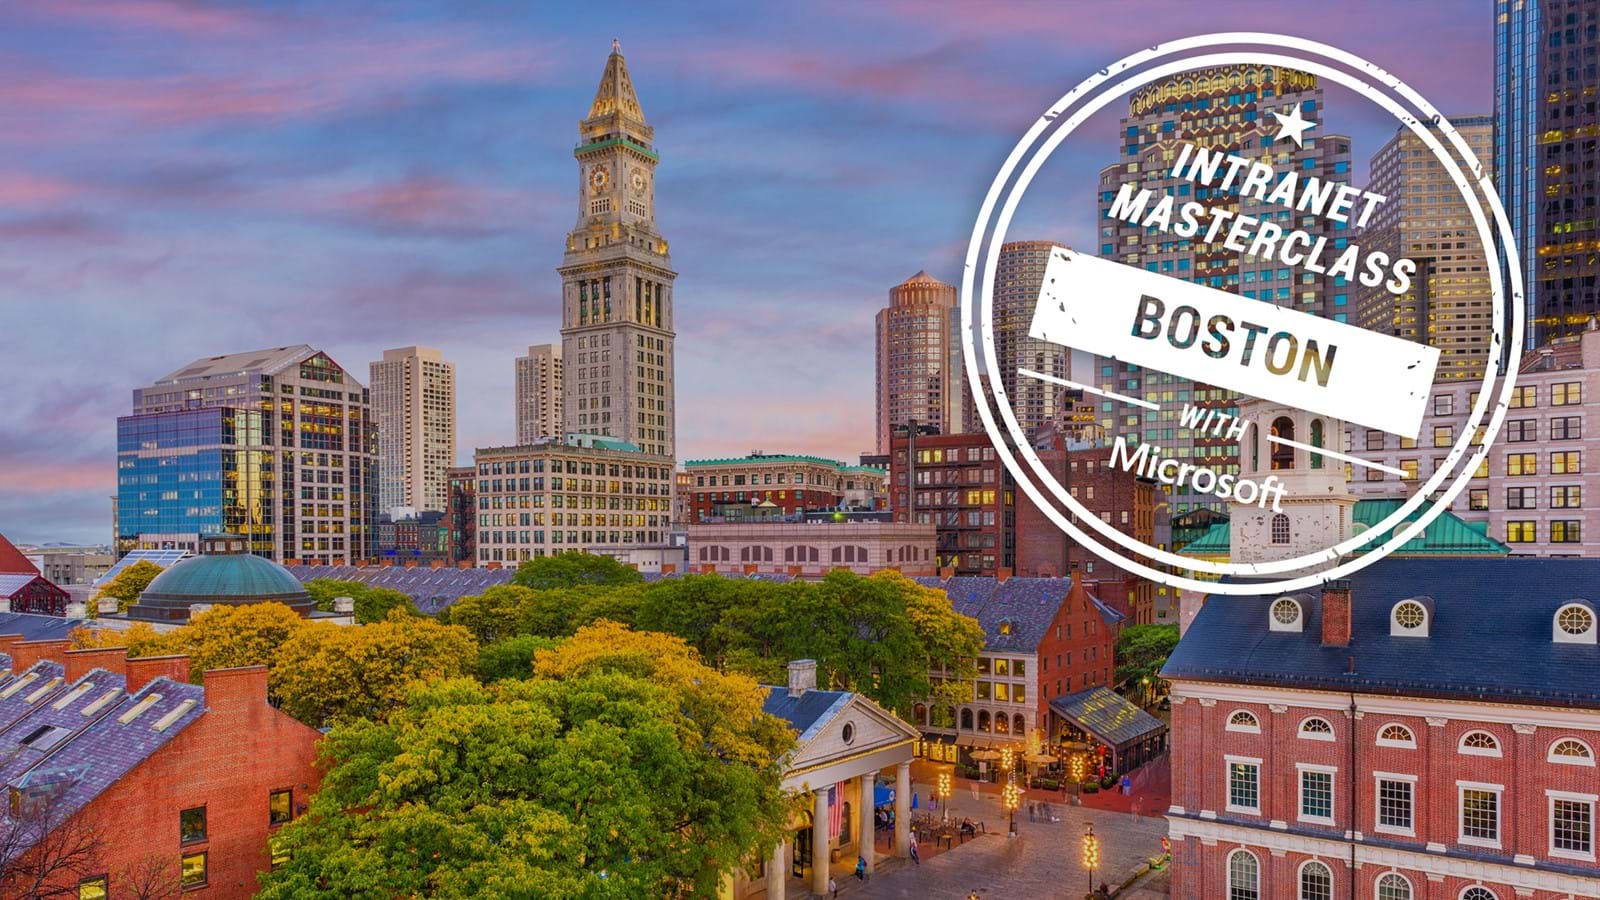 Unily's FREE Virtual Intranet Masterclass in Boston, MA